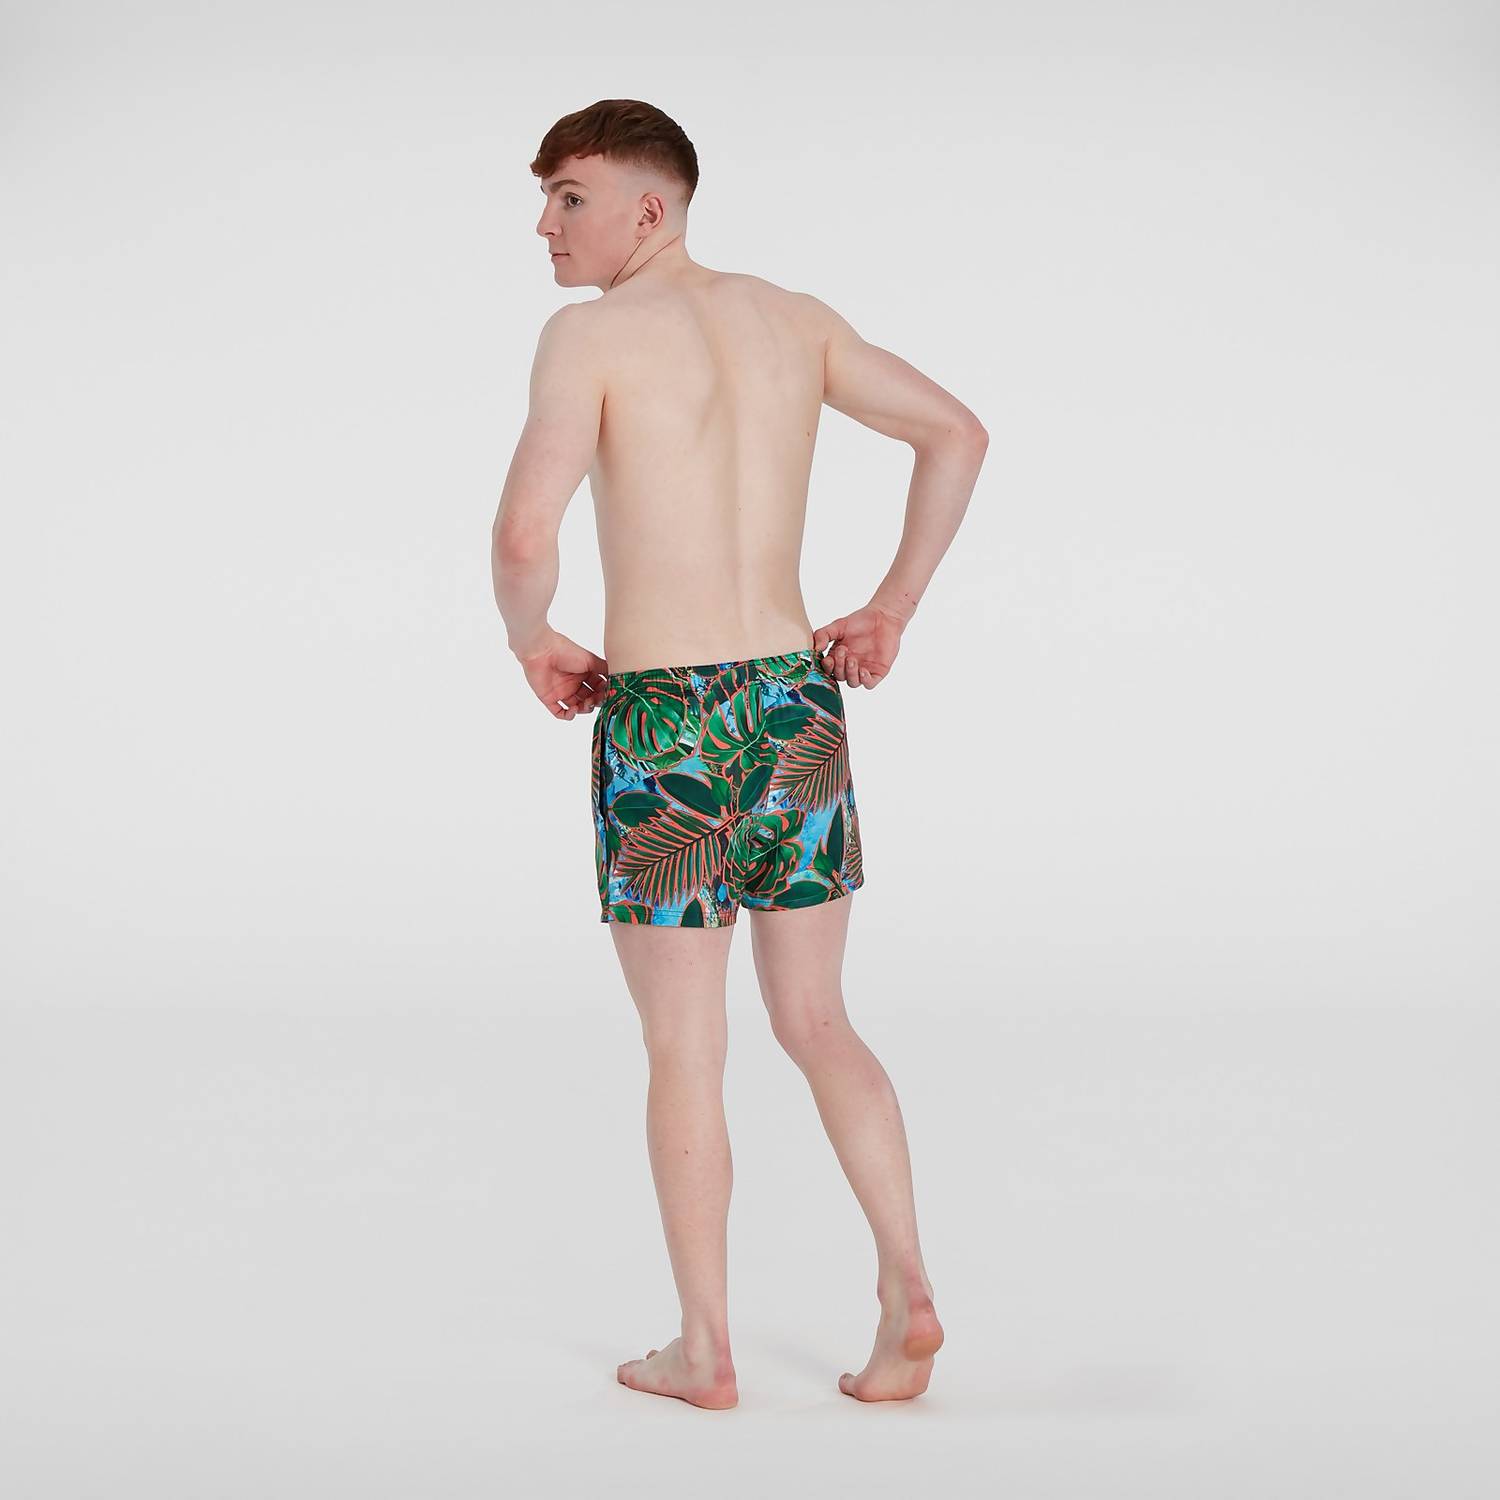 Short De Bain Homme Digital Printed Leisure 35 Cm Vert/Rouge Shorts De Bain Speedo Hommes – 1